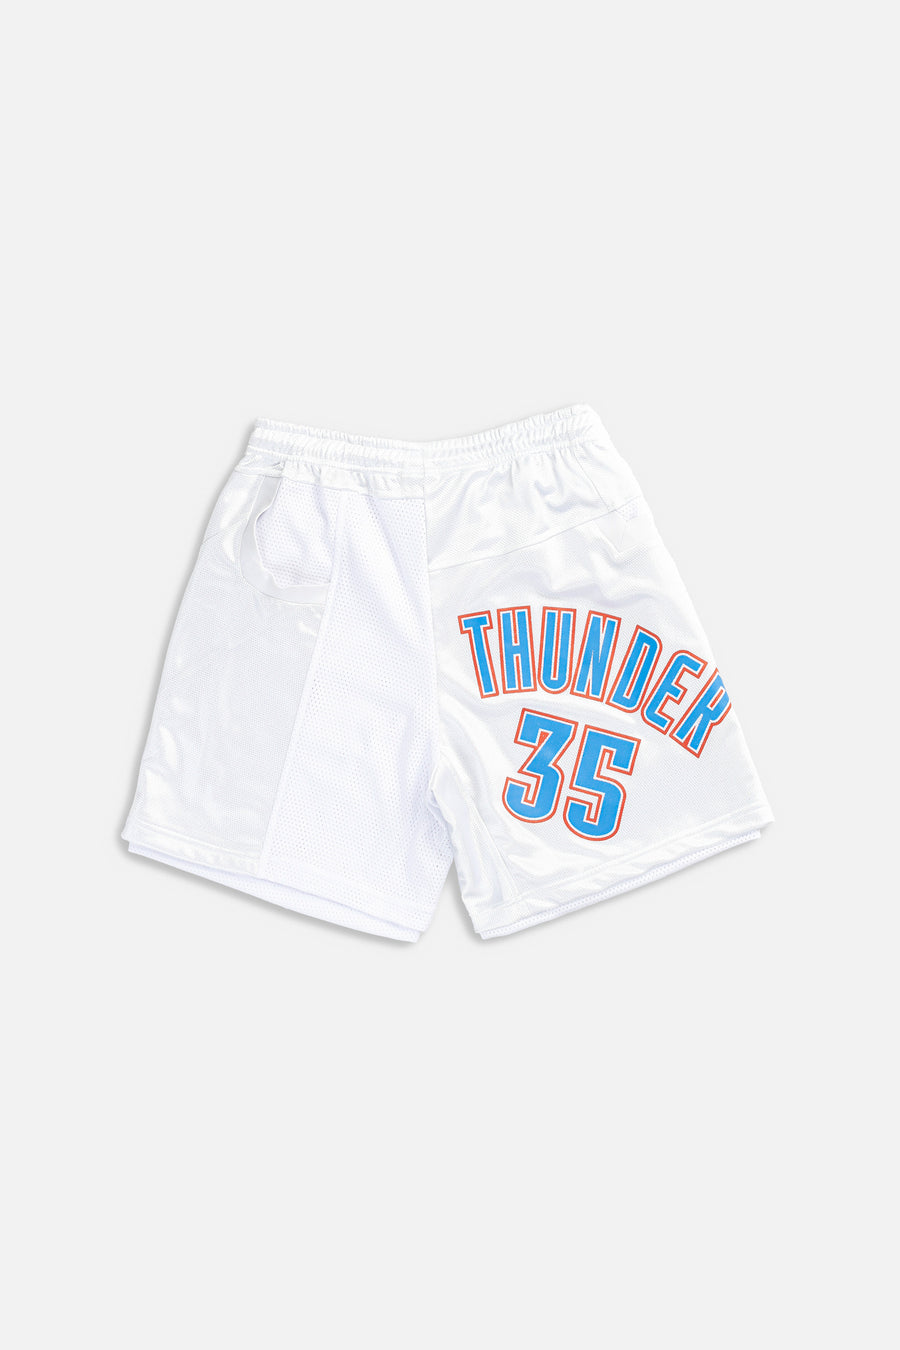 Unisex Rework Oklahoma City Thunder NBA Jersey Shorts - M